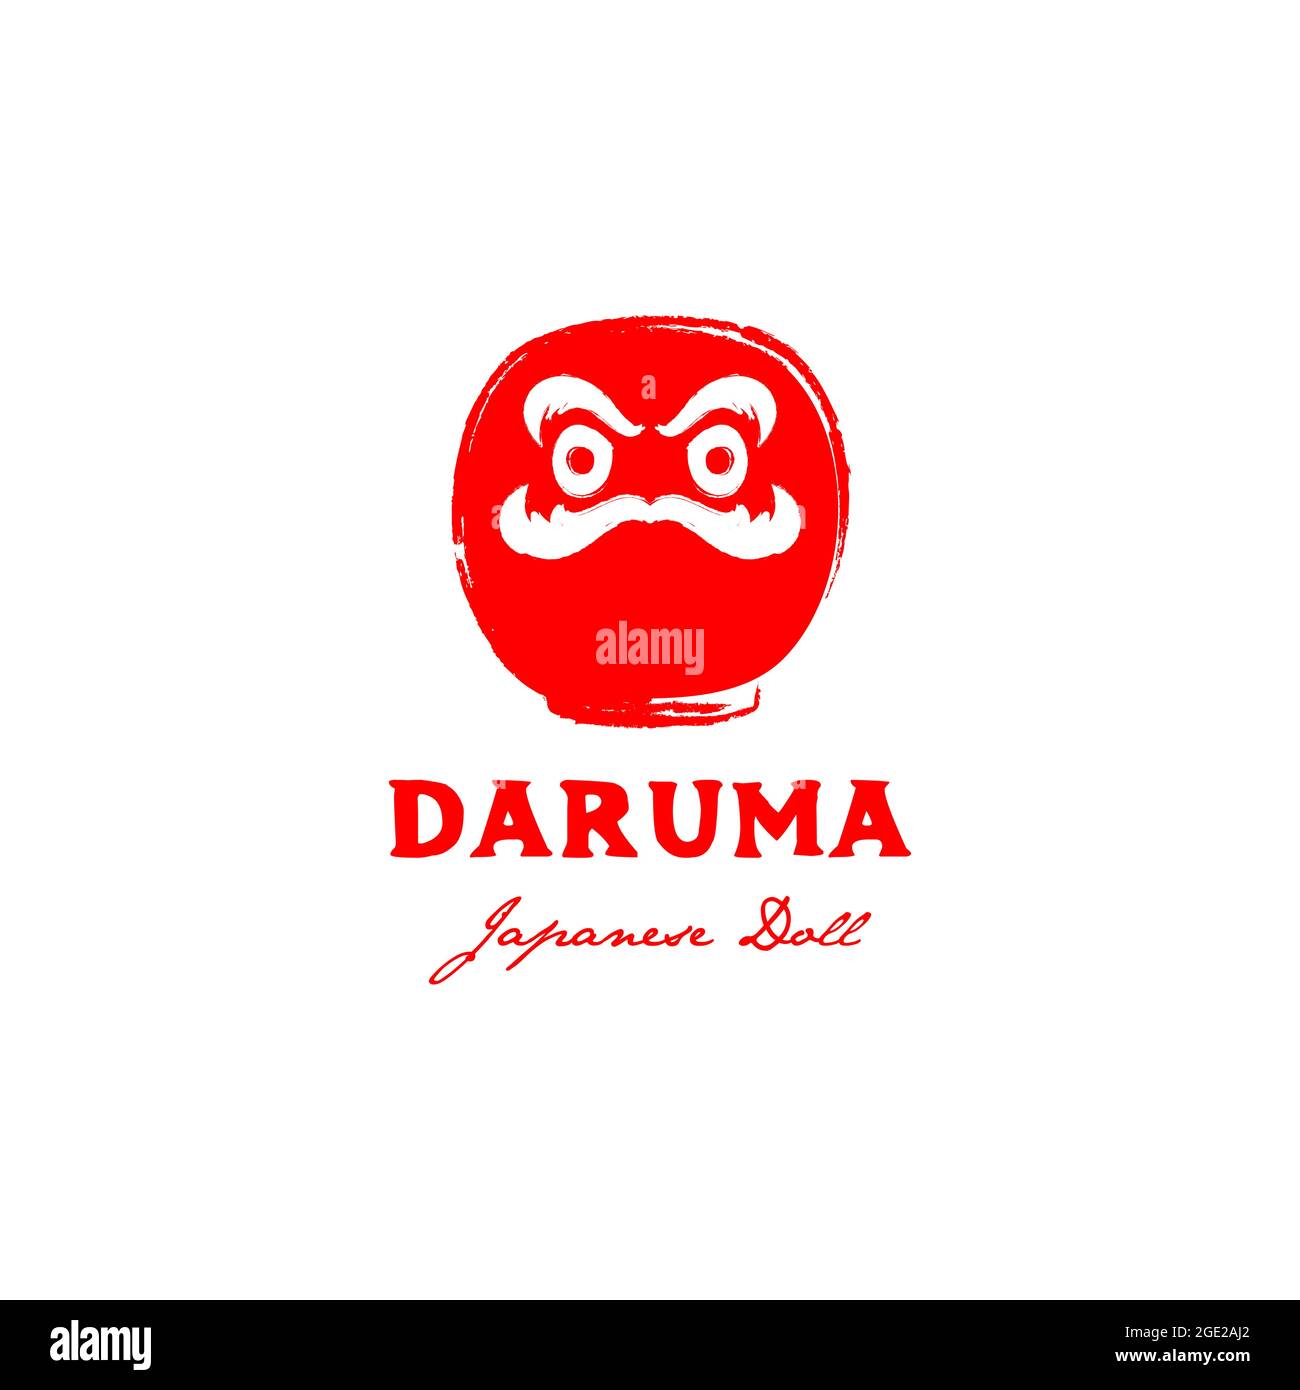 Japanese Daruma Logo Design Vector illustration Stock Vector